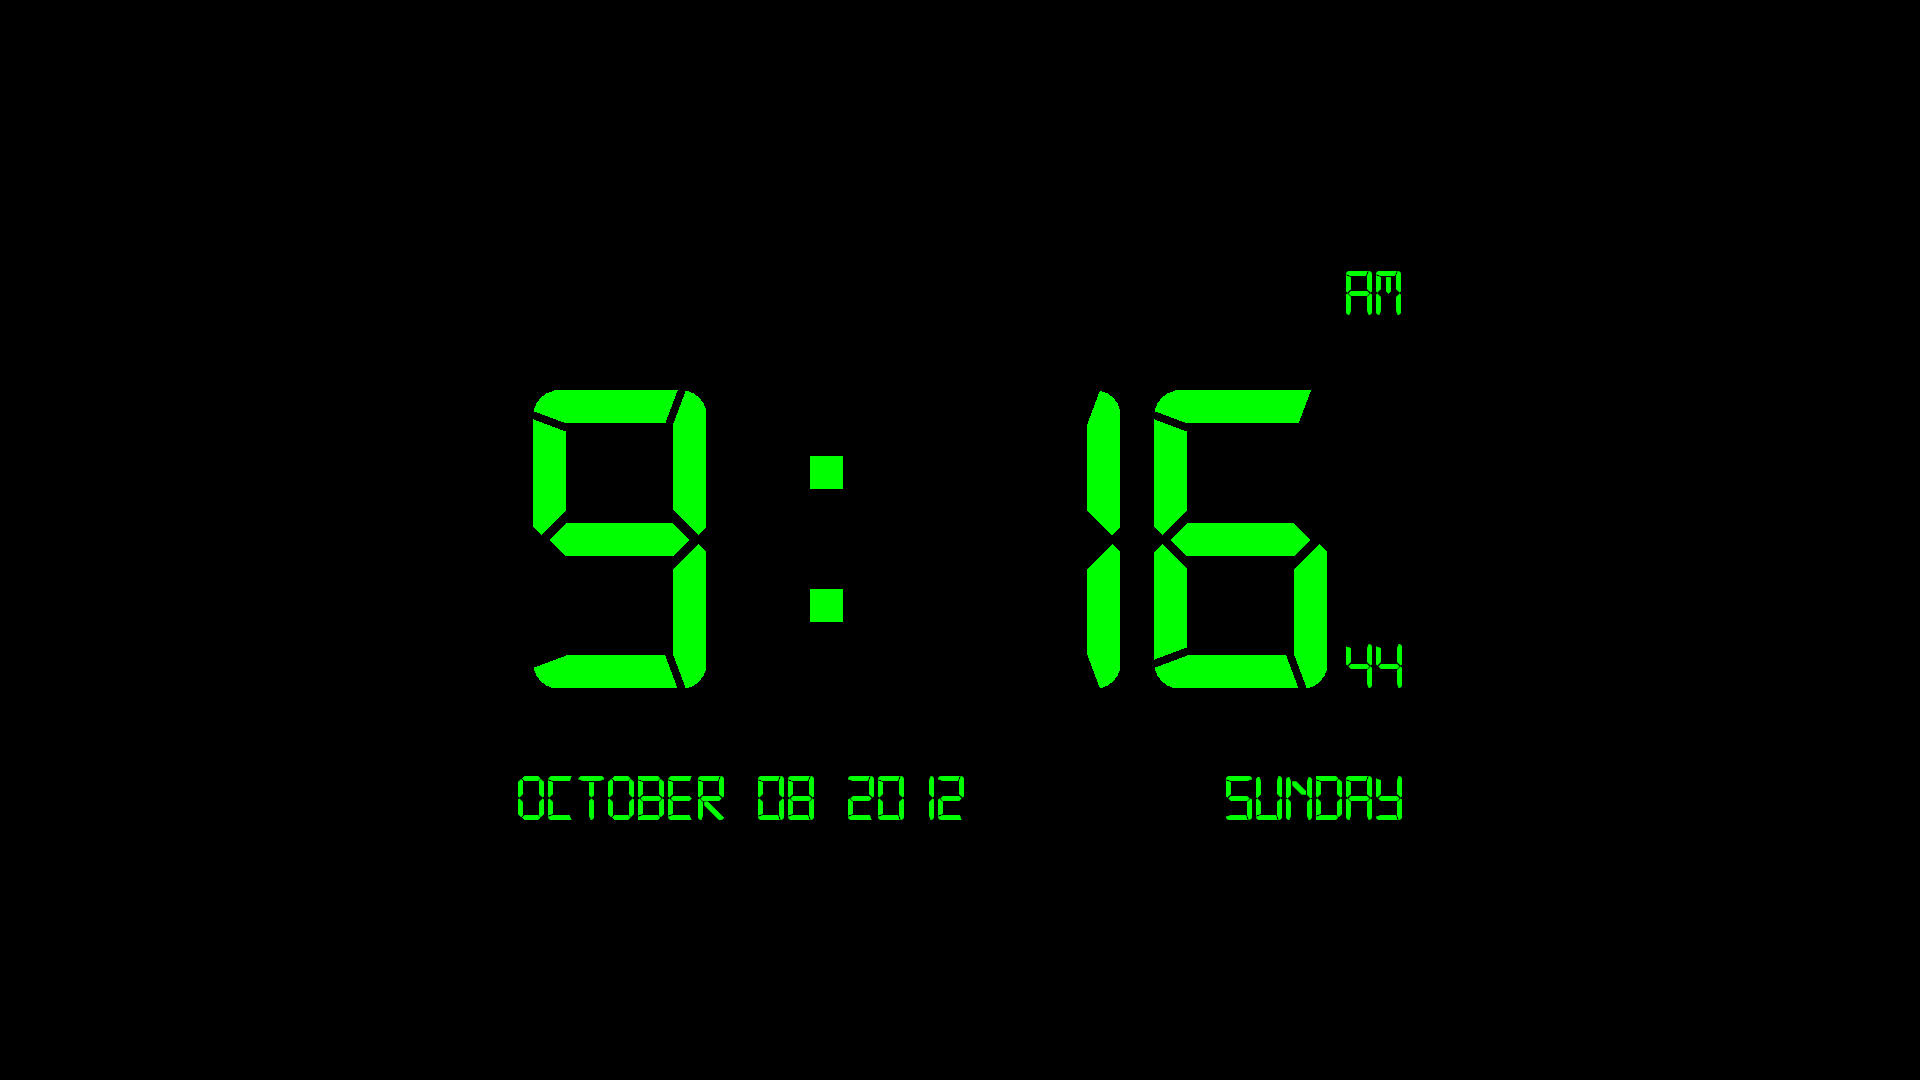 flip screen clock windows 7 screensaver